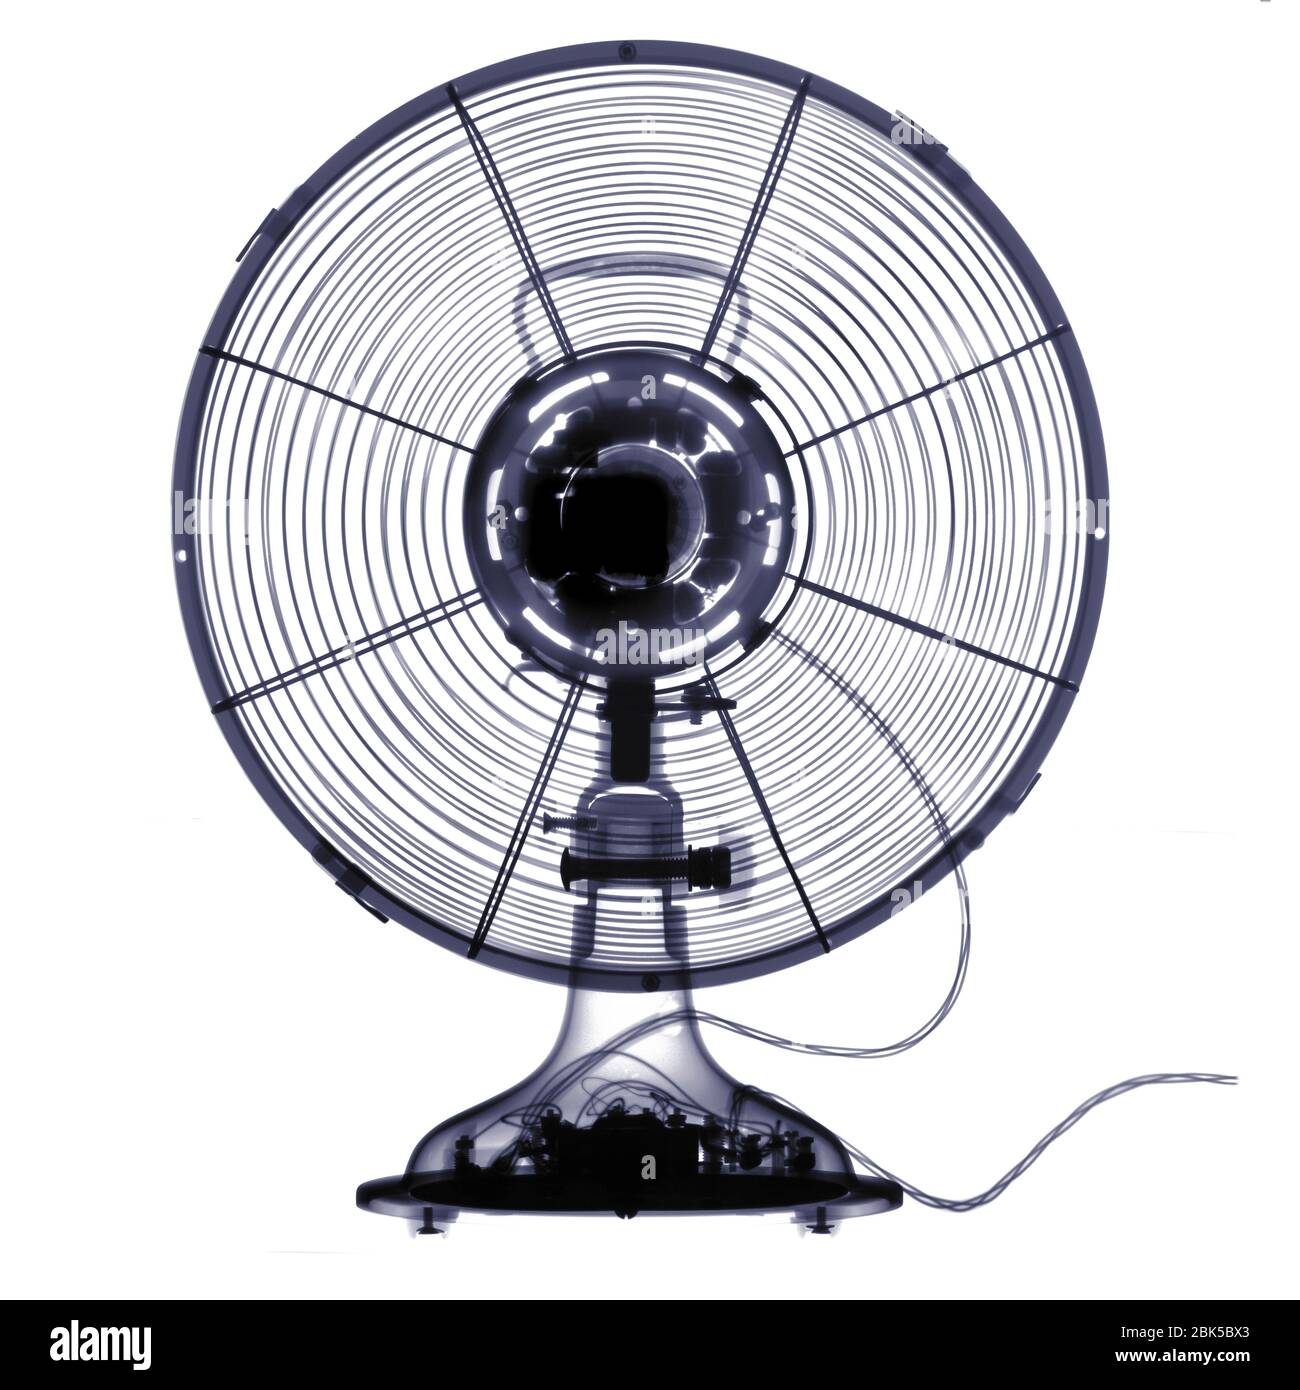 Electrical fan, X-ray. Stock Photo